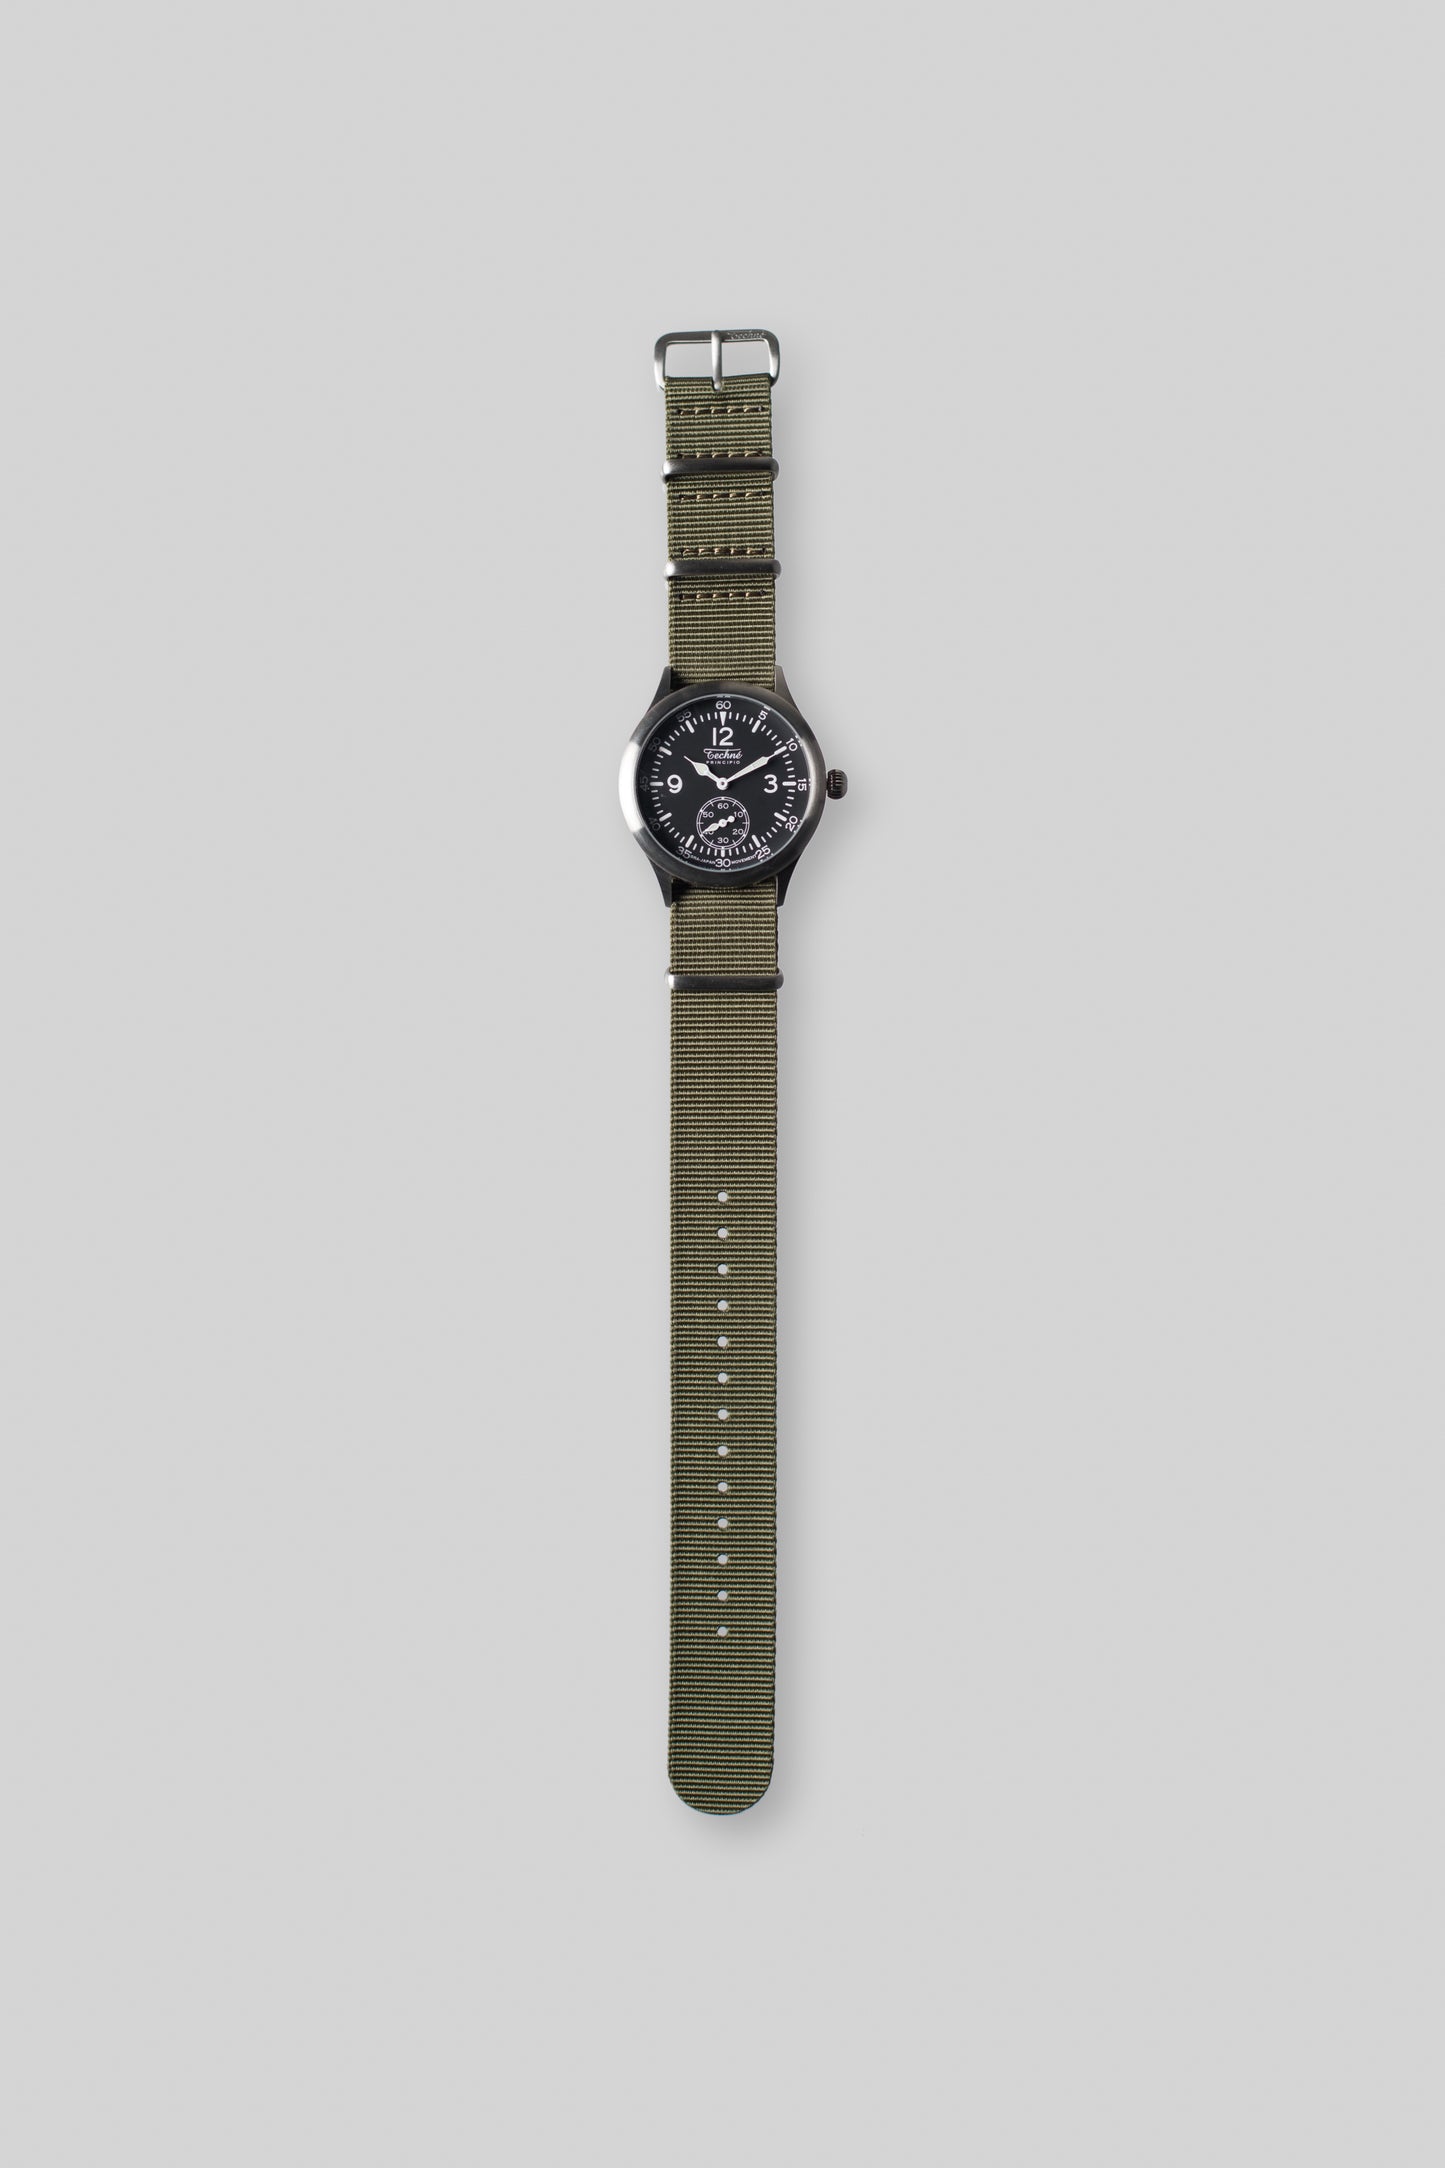 Merlin 246 GB Olive Watch